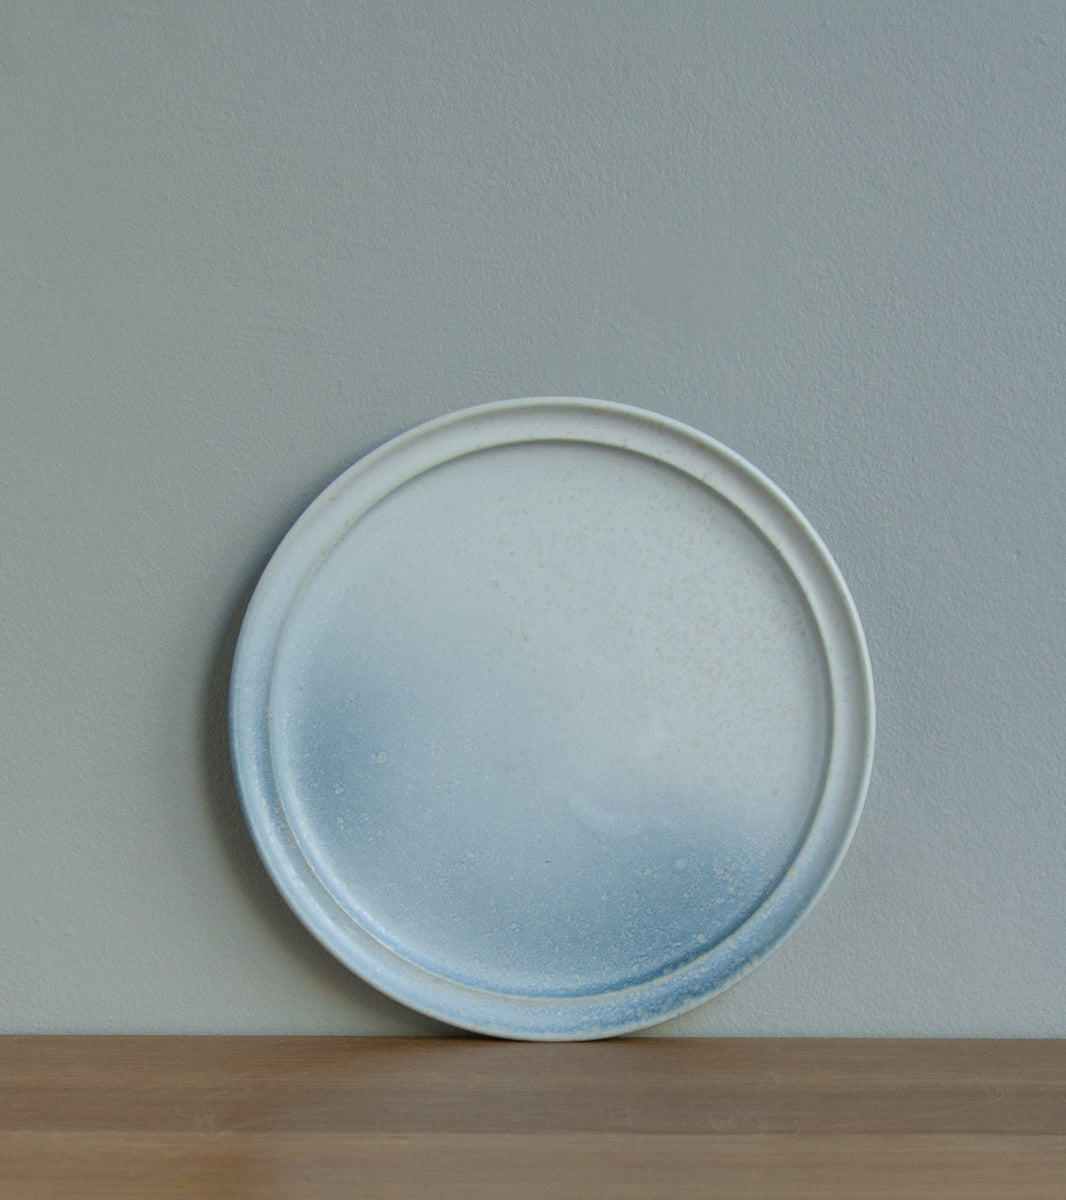 Rimmed 'Noma' Plate White & Blue Glaze Kasper Würtz - Image 3